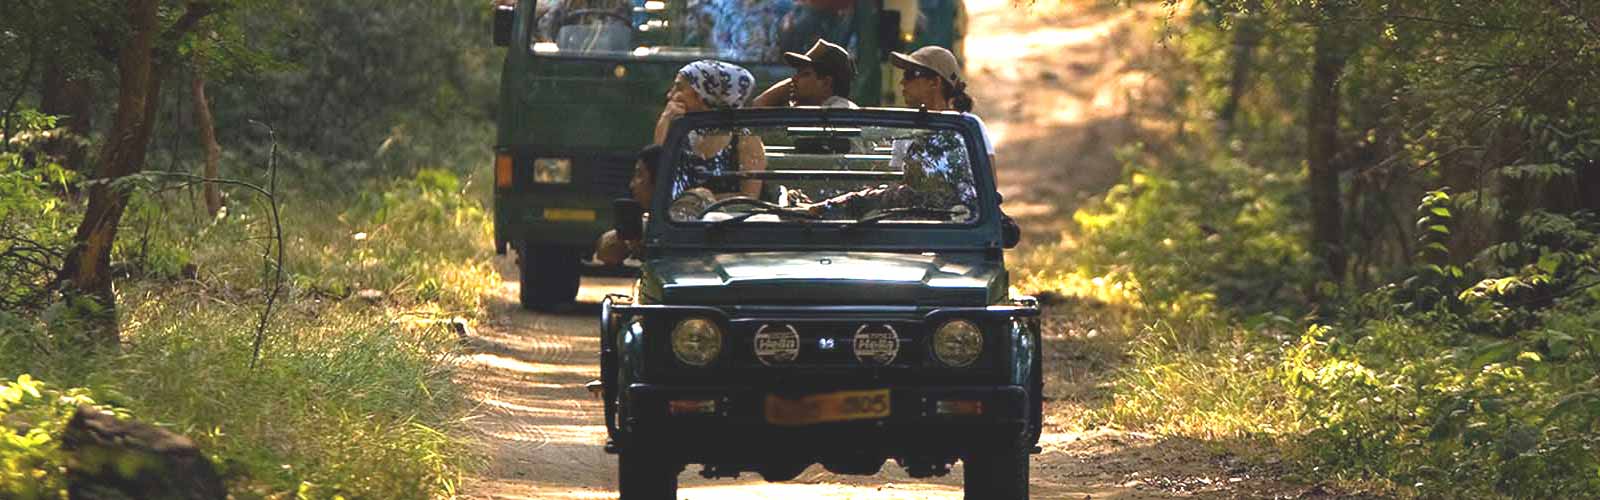 corbett national park jeep safari